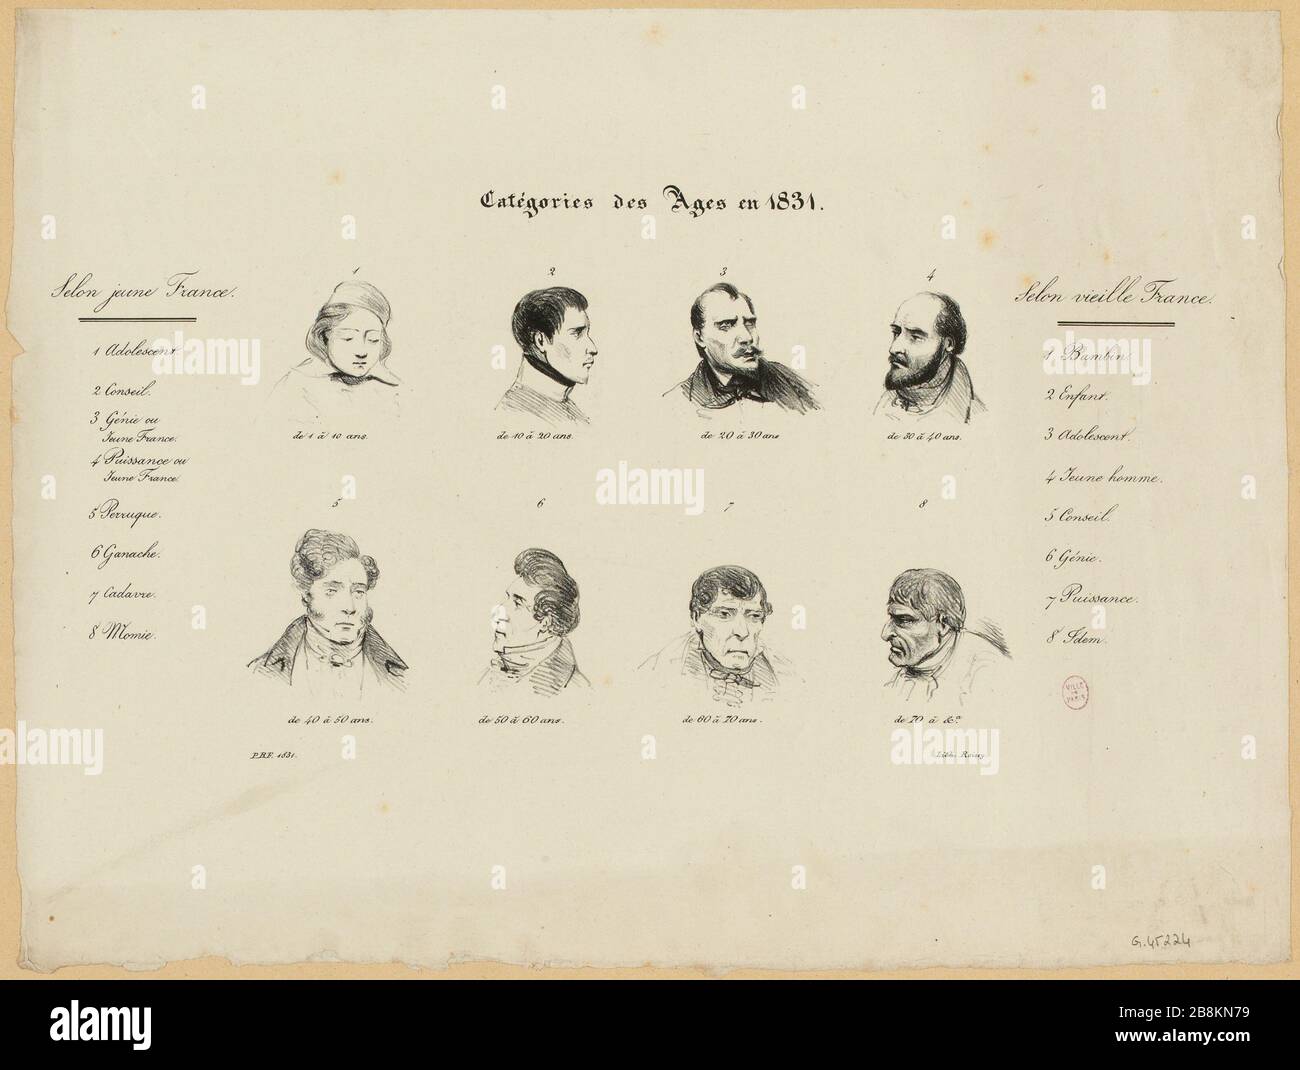 Kategorien des Alters im Jahr 1831. (TI) Stockfoto